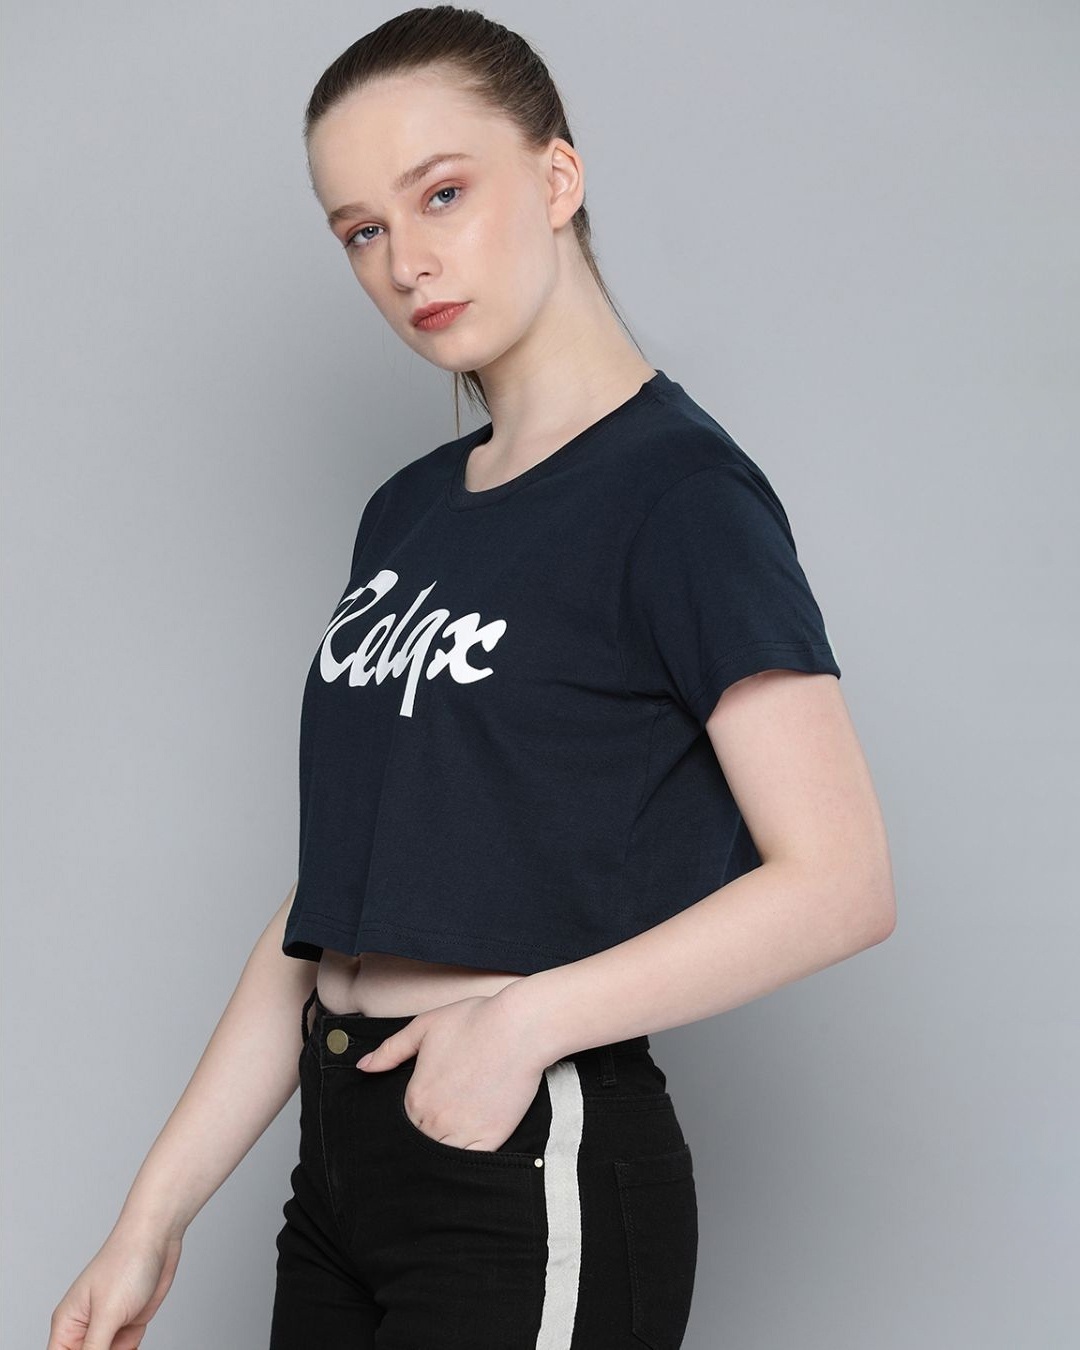 Shop Women's Blue Typography T-shirt-Design